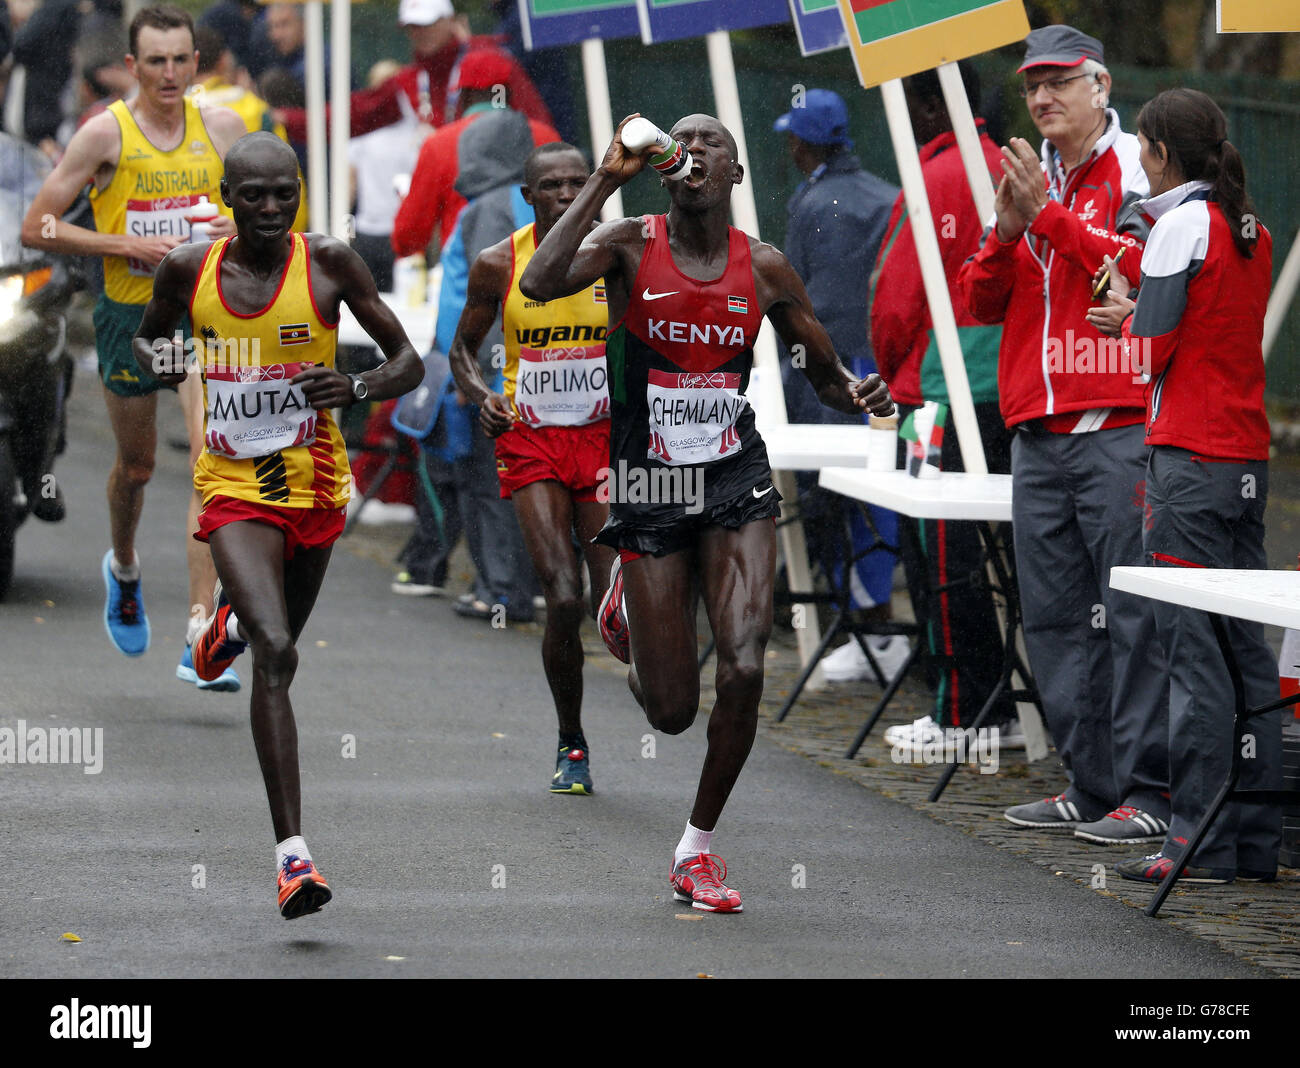 Kenya's Stephen Chemlany takes on water beside Uganda's Munyo Solomon Mutai (left) the men's marathon during the 2014 Commonwealth Games in Glasgow. Stock Photo